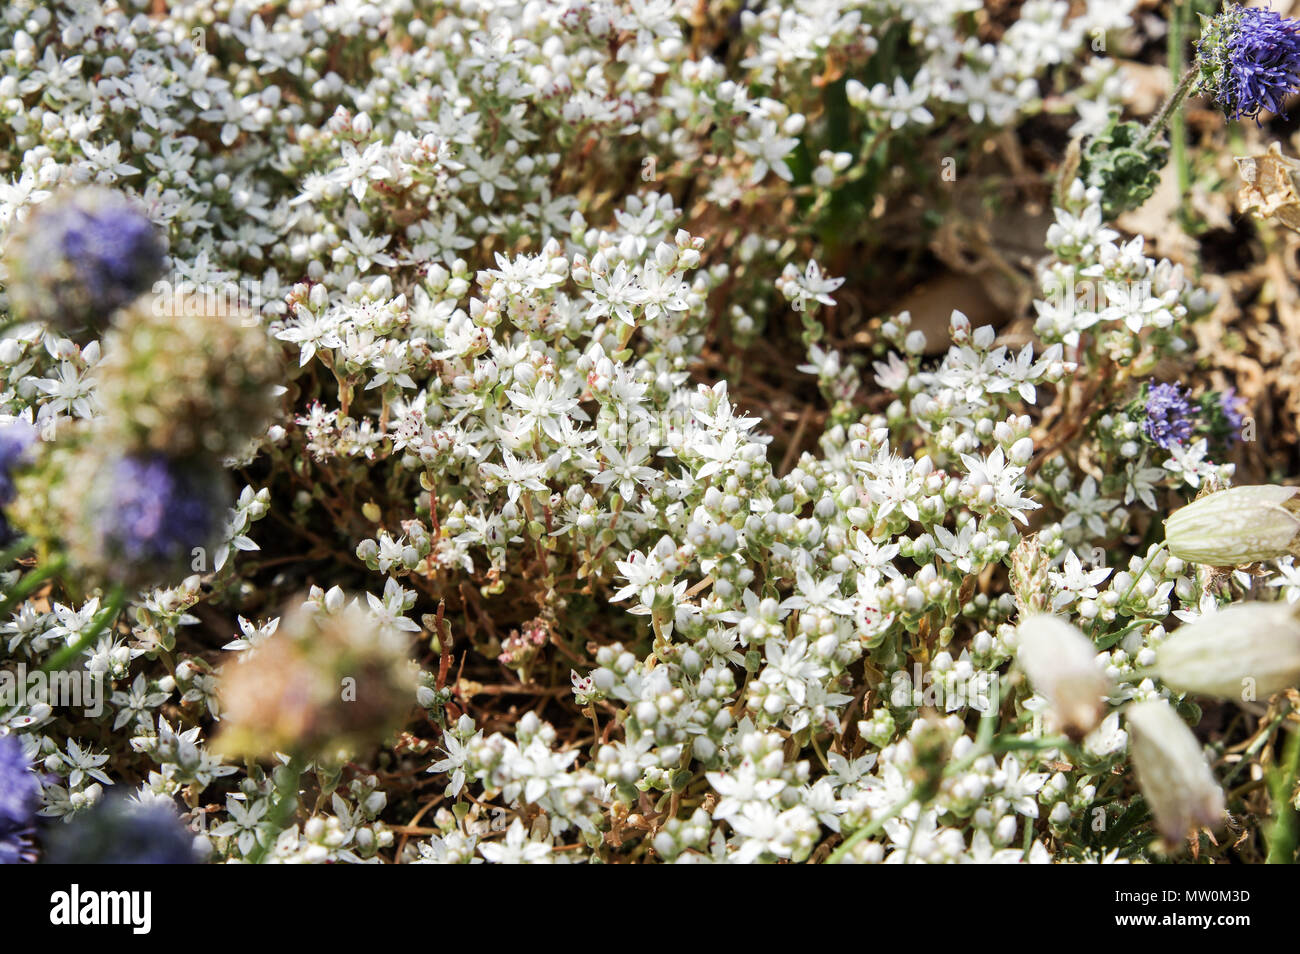 Dainty white flowers of English Stonecrop (Sedum anglicum) growing on e rocks around Portelet Bay - Jersey, Channel Islands Stock Photo